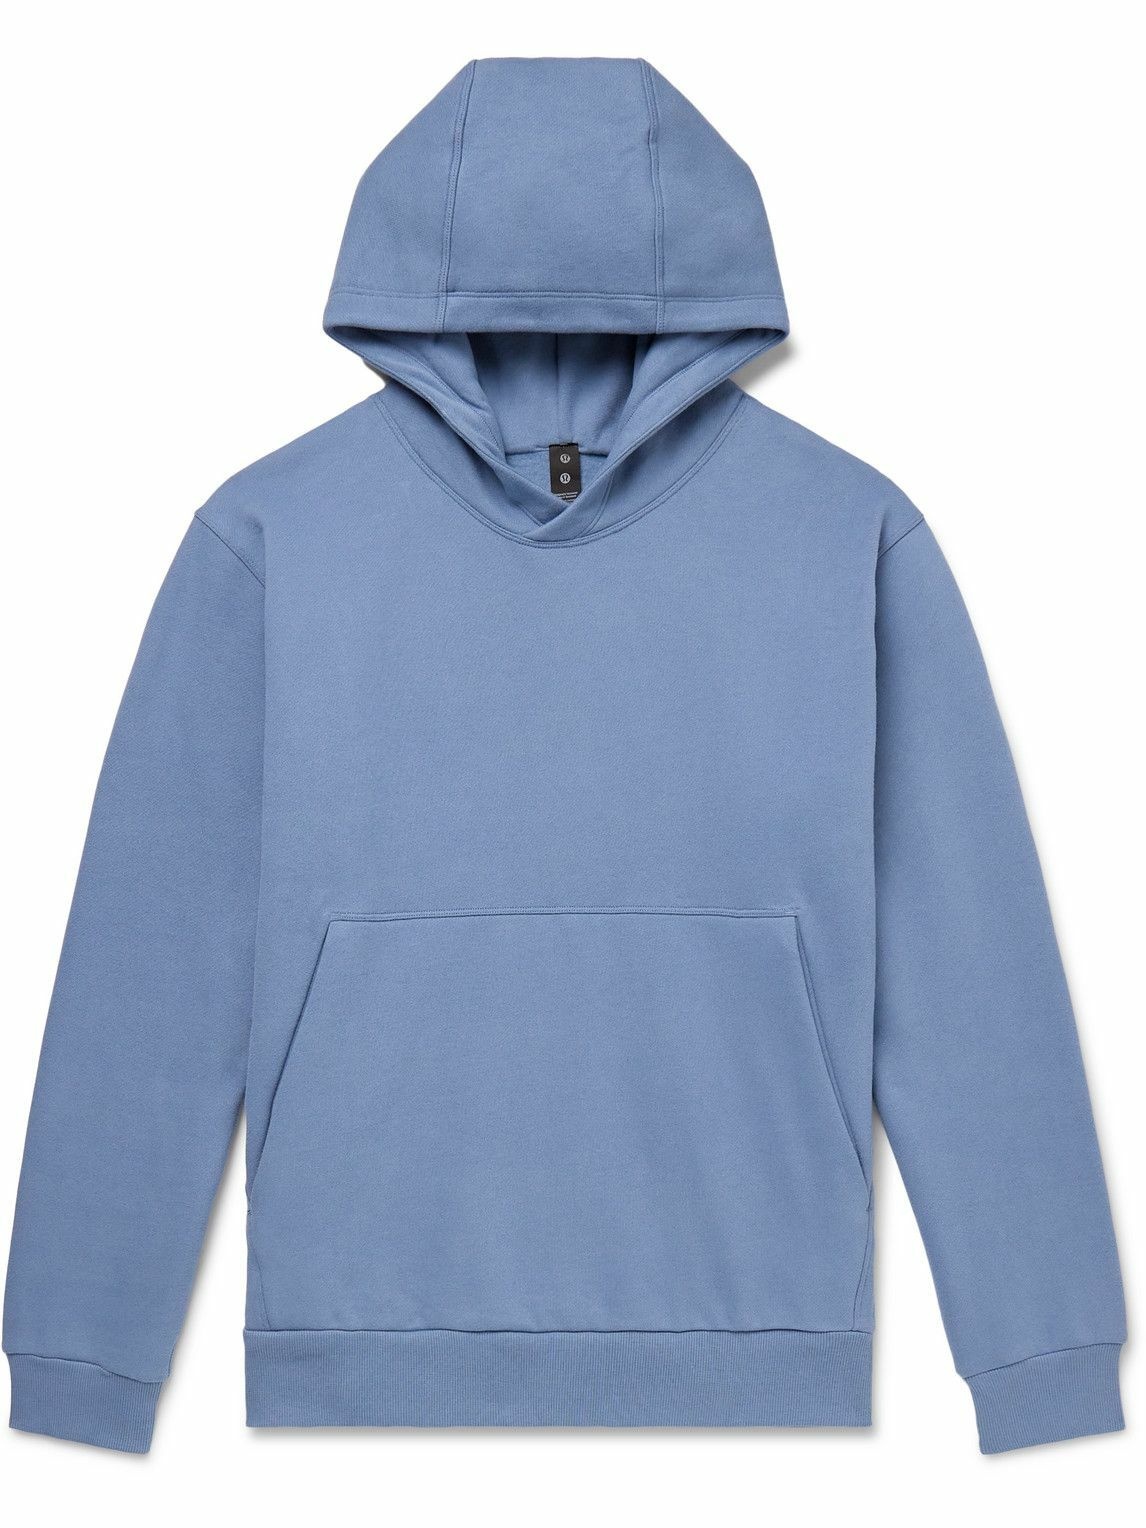 Blue License to Train jersey hoodie, Lululemon